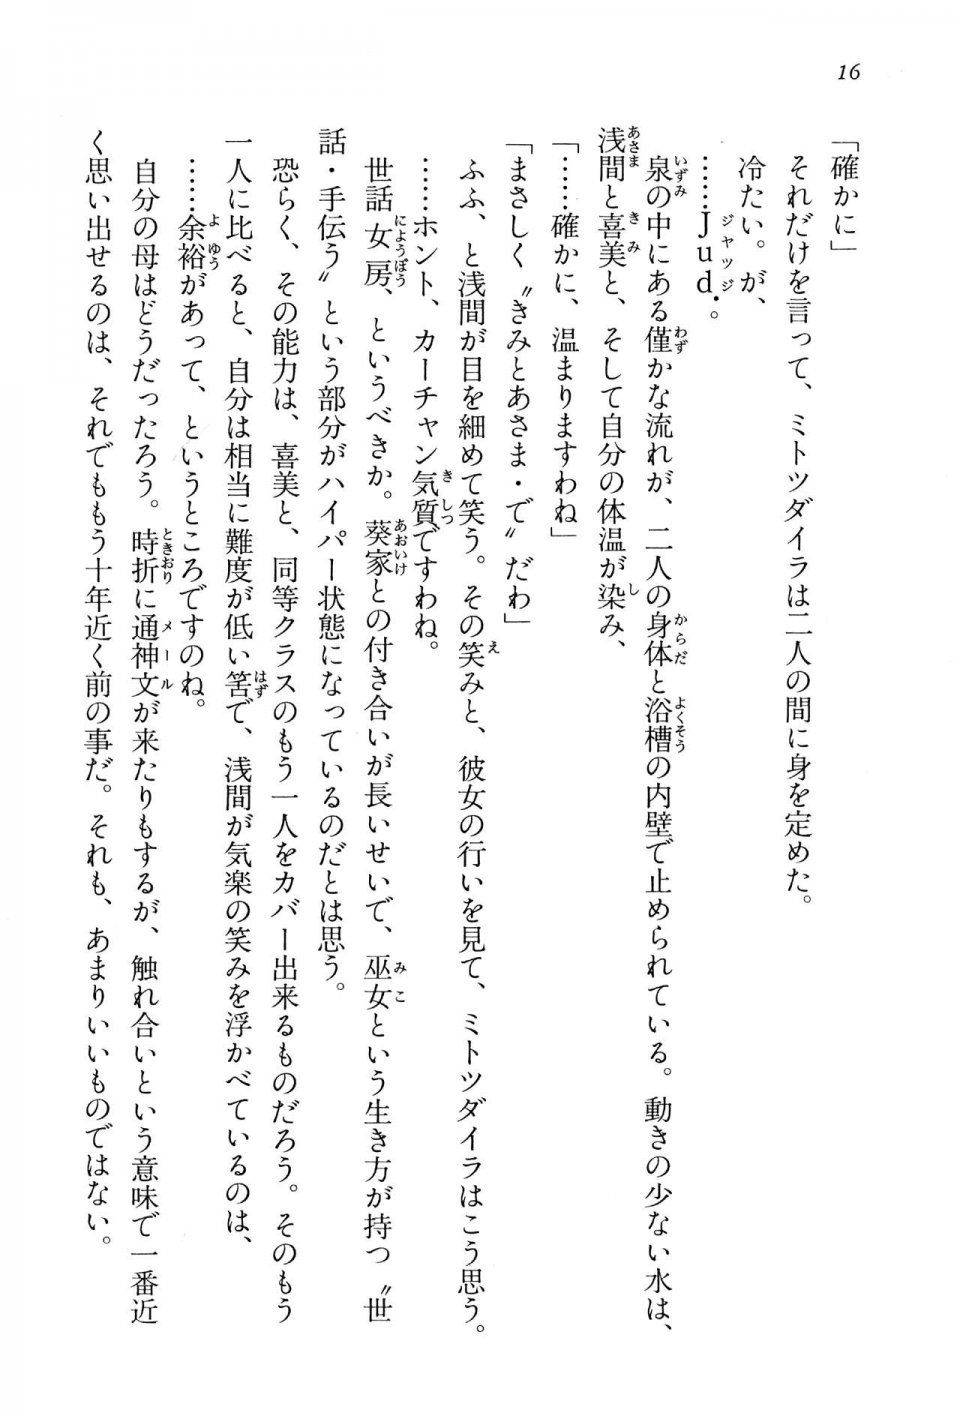 Kyoukai Senjou no Horizon BD Special Mininovel Vol 5(3A) - Photo #20